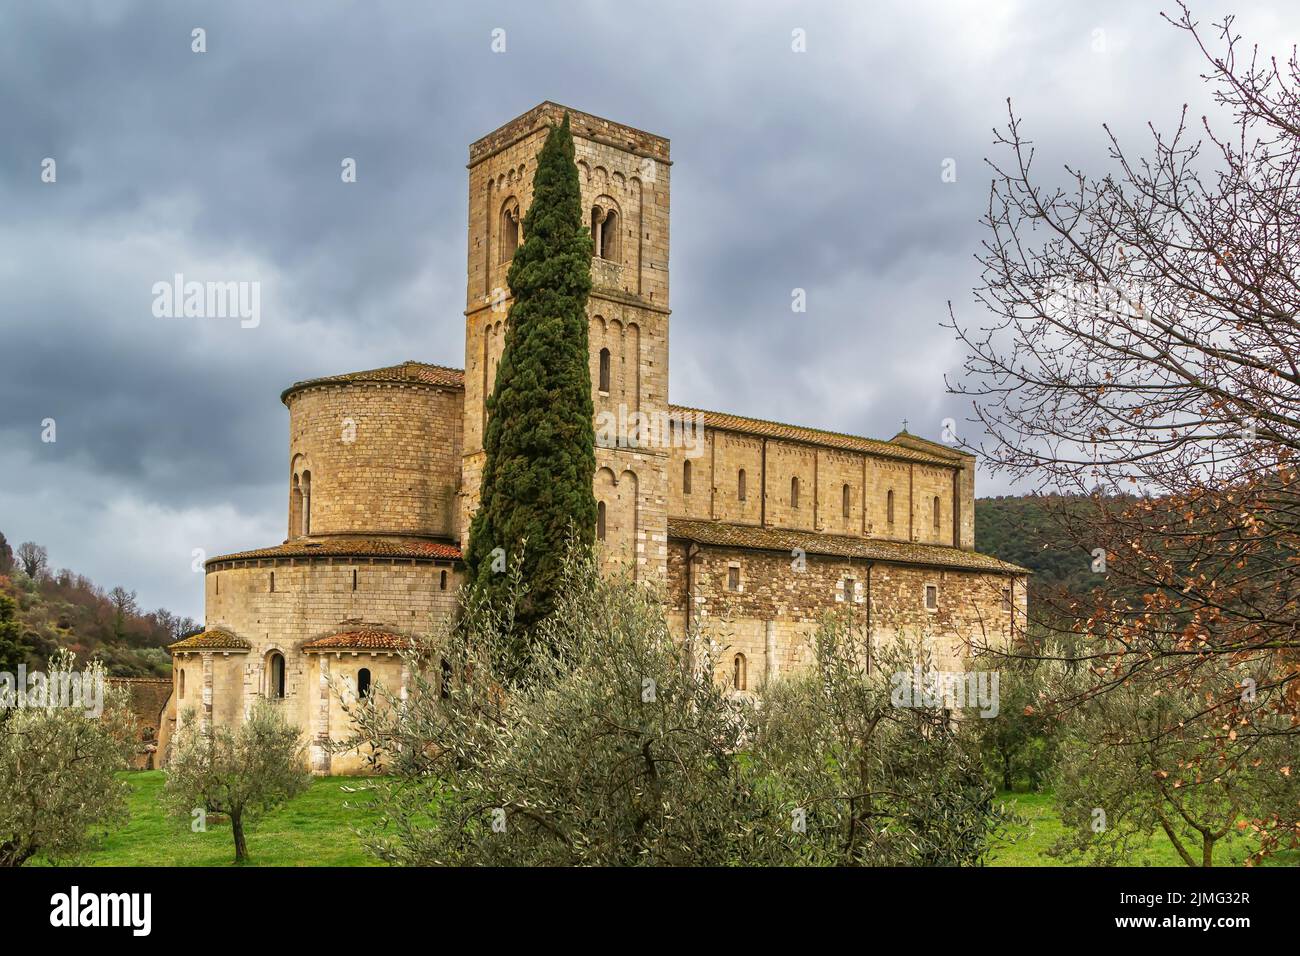 Abbey of Sant Antimo, Italy Stock Photo